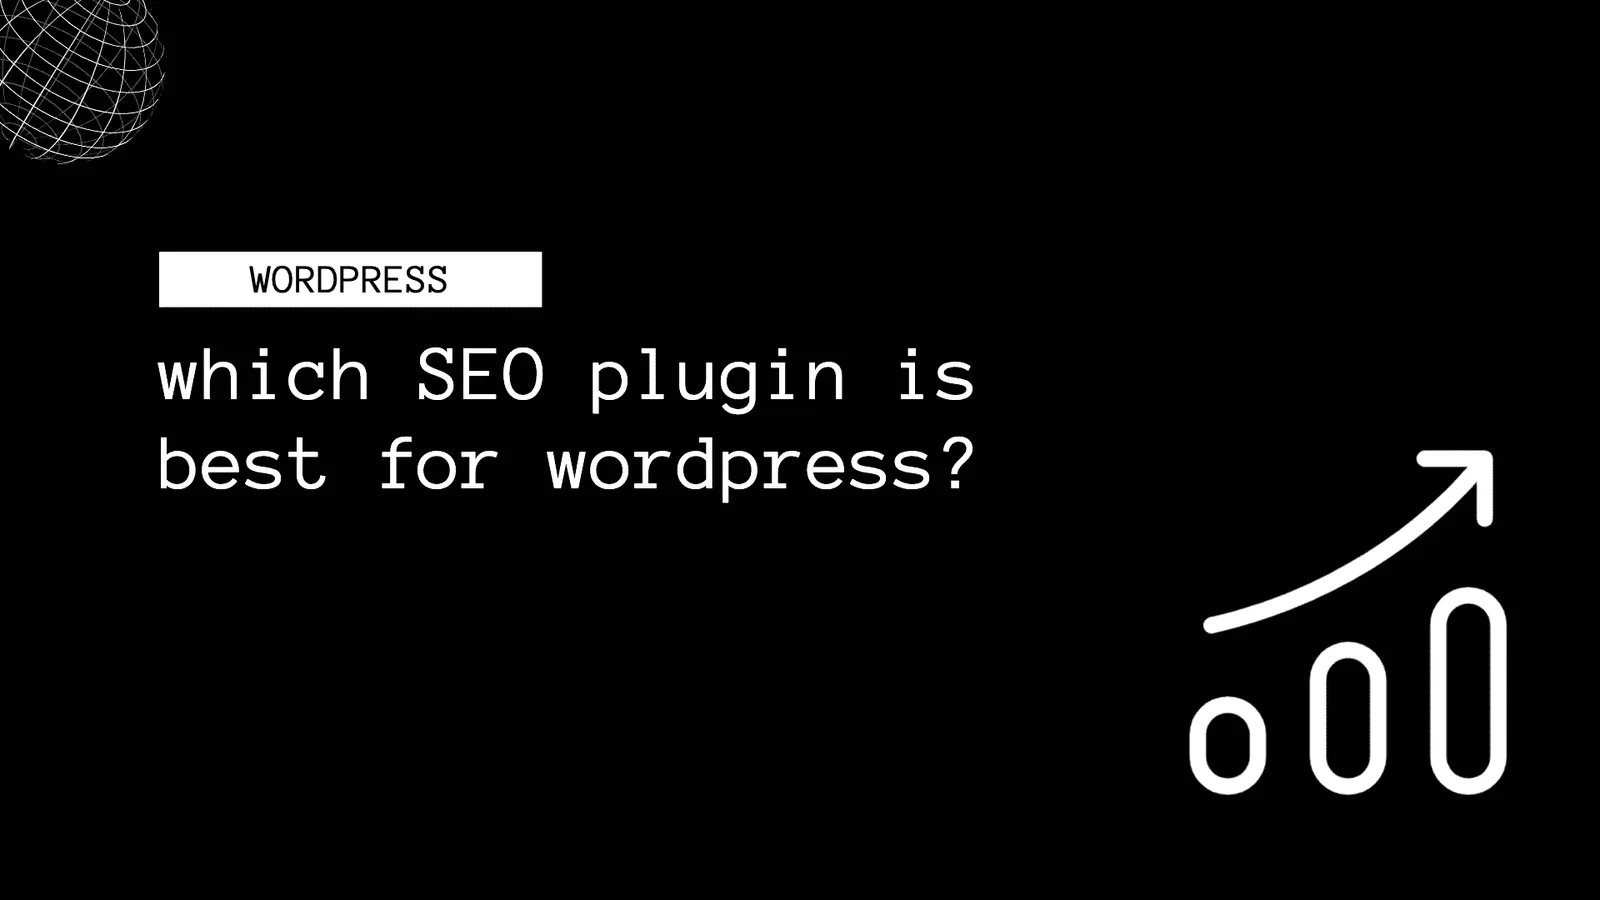 Seo Plugin Is Best For Wordpress